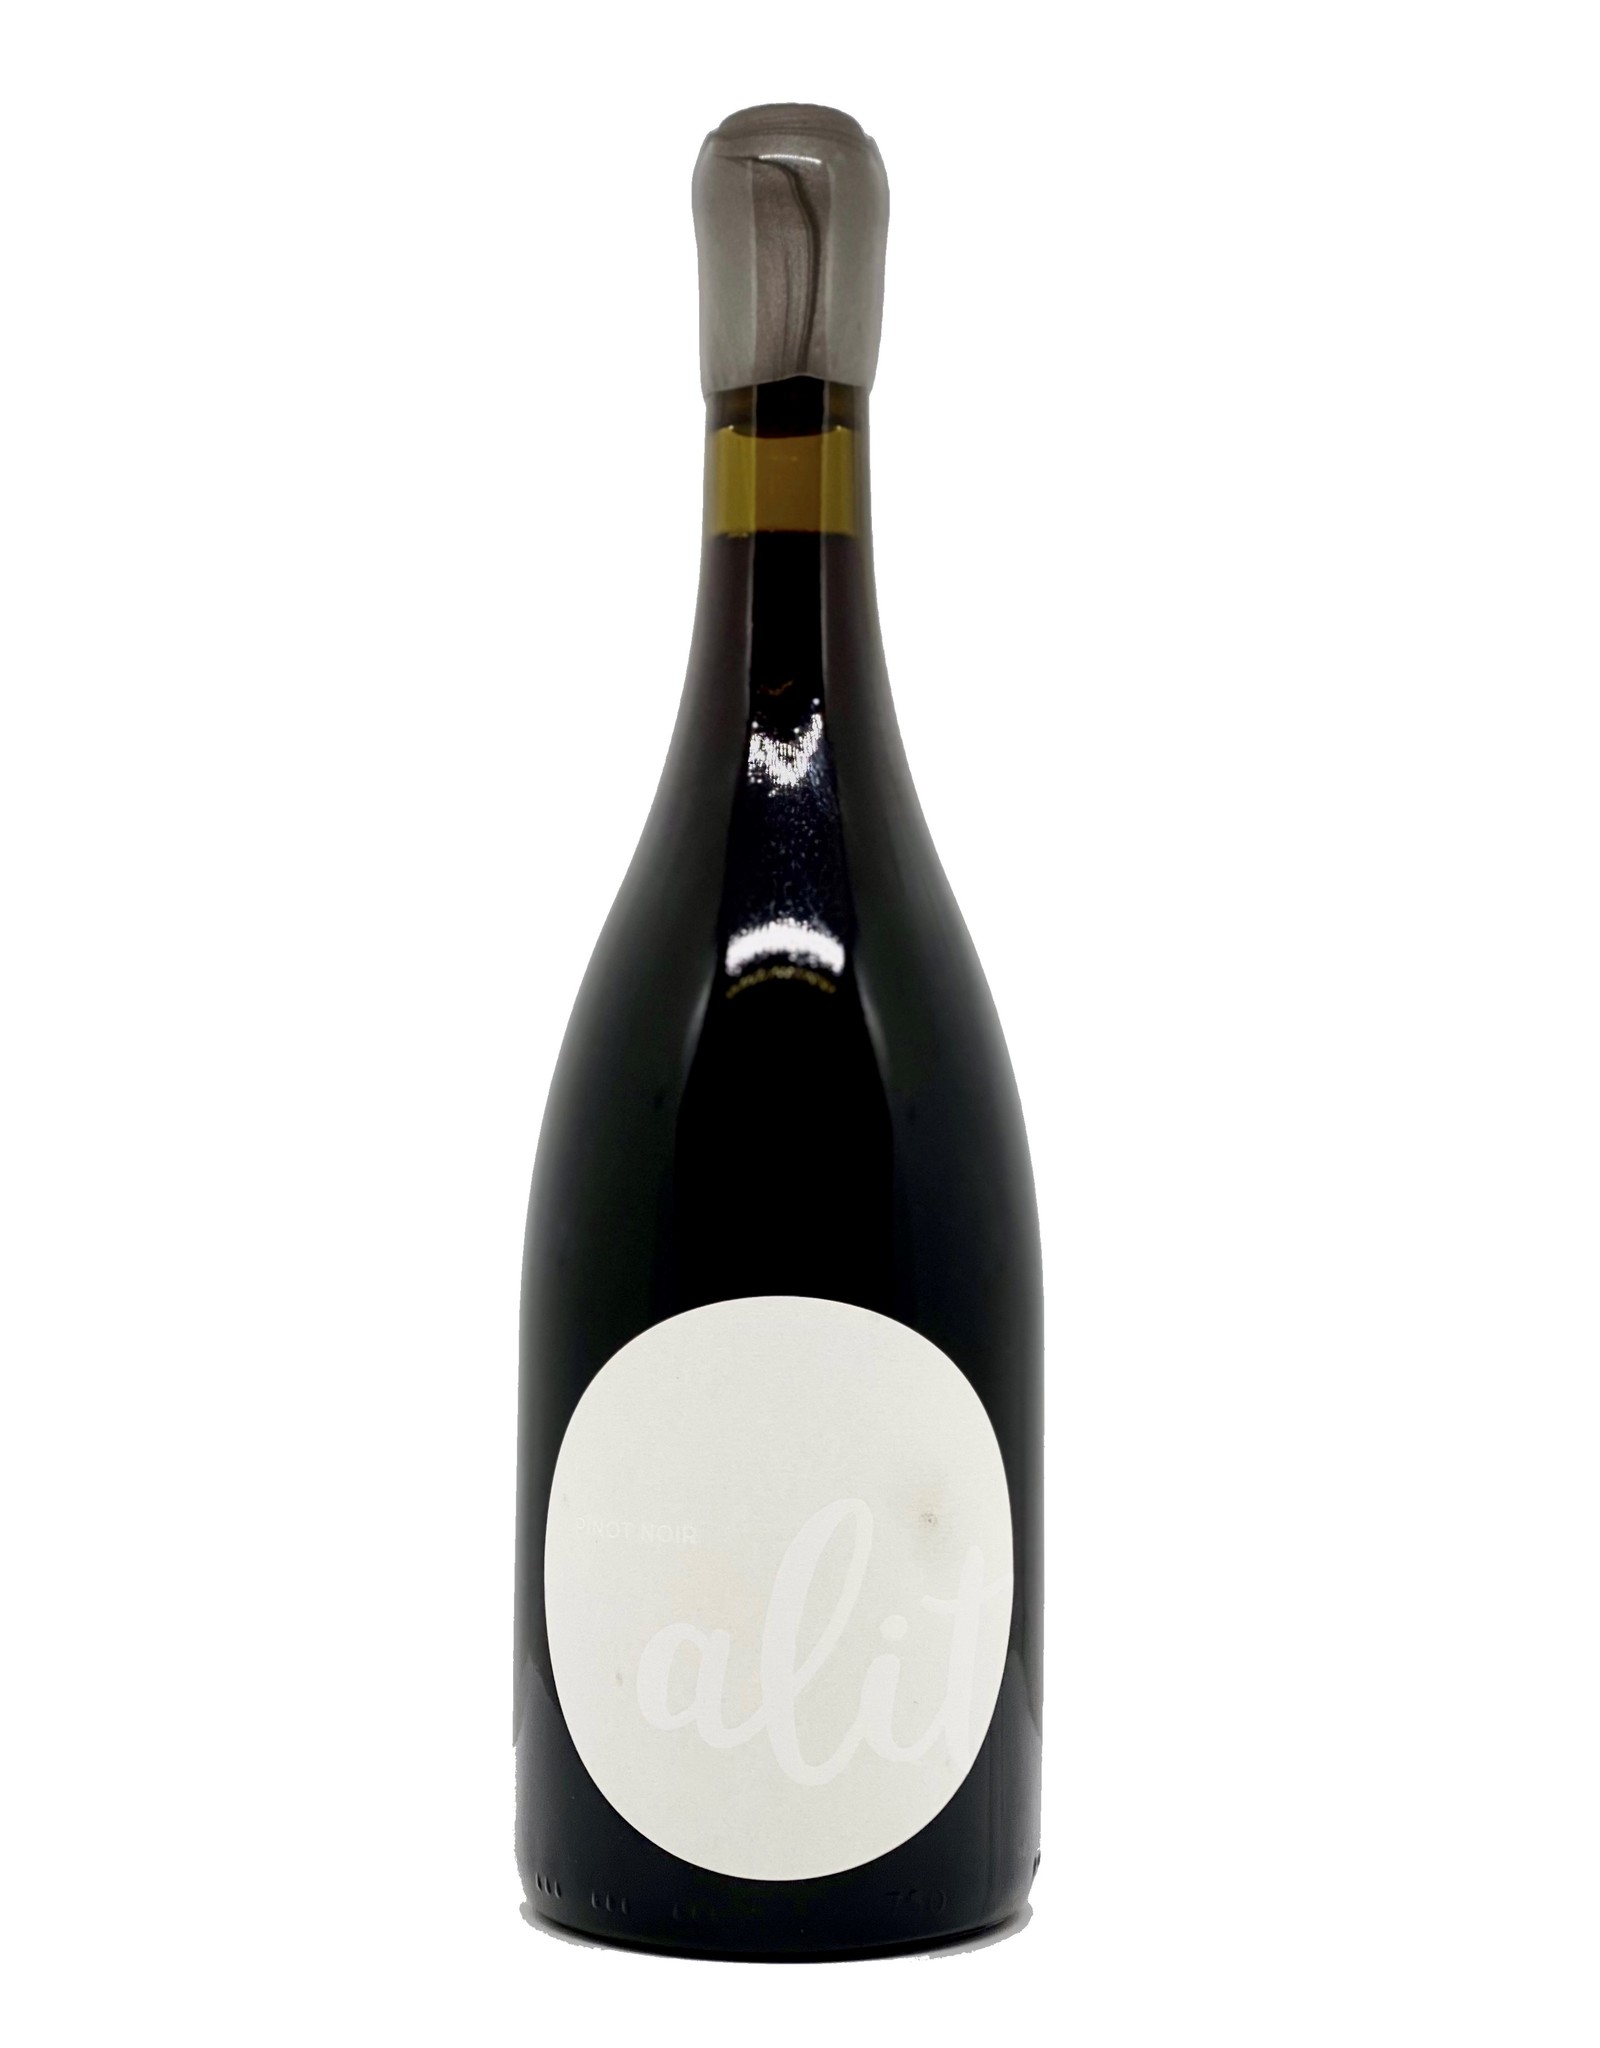 Alit Willamette Valley Pinot Noir